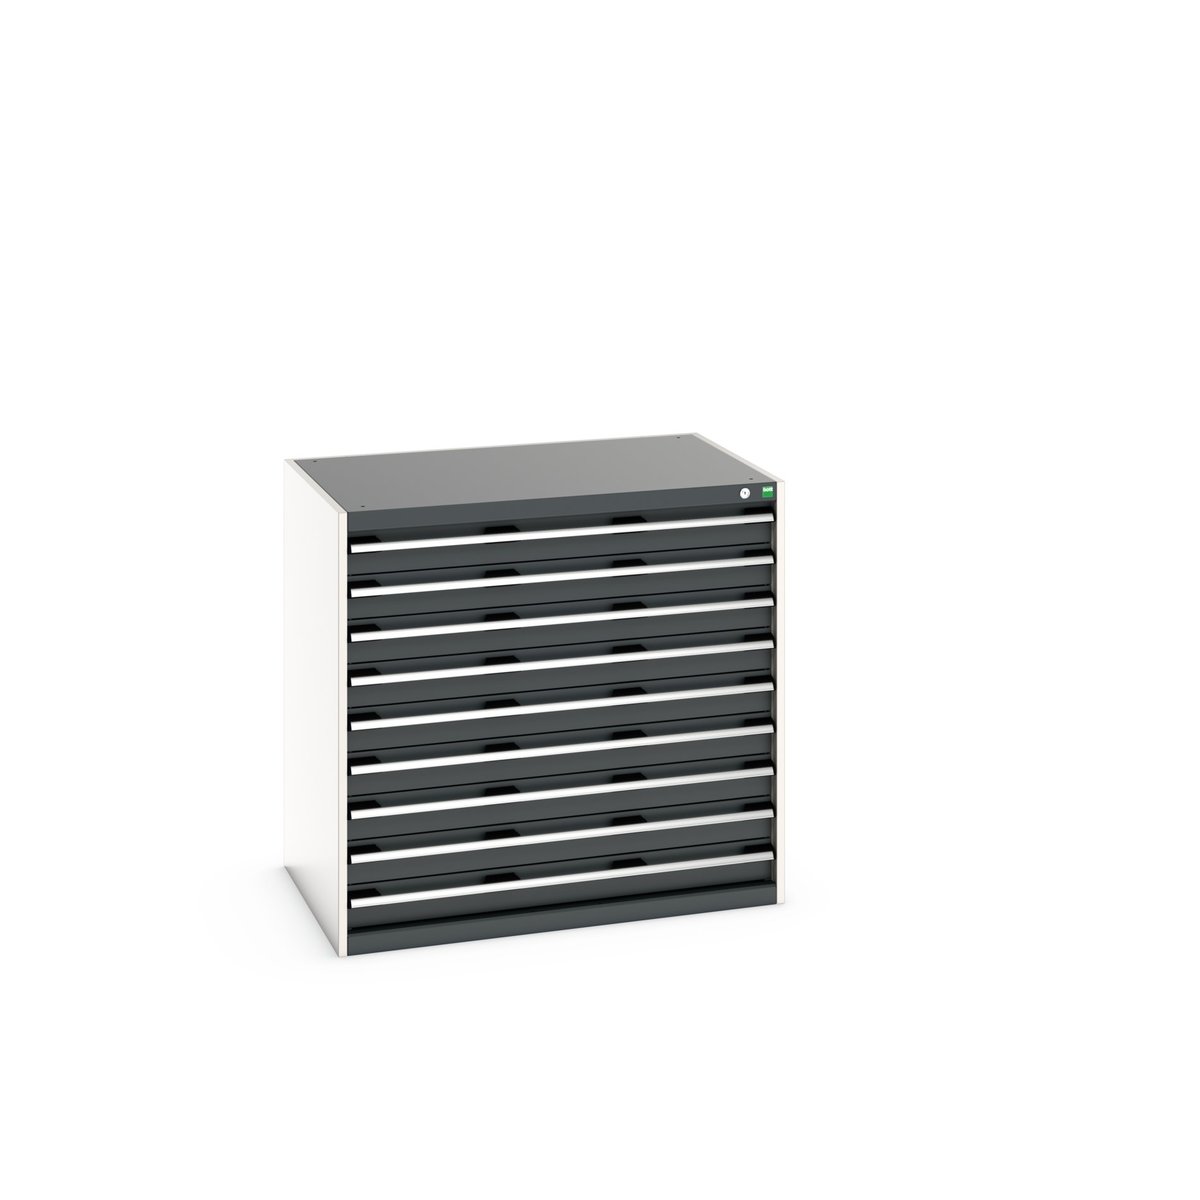 40029027. - cubio drawer cabinet